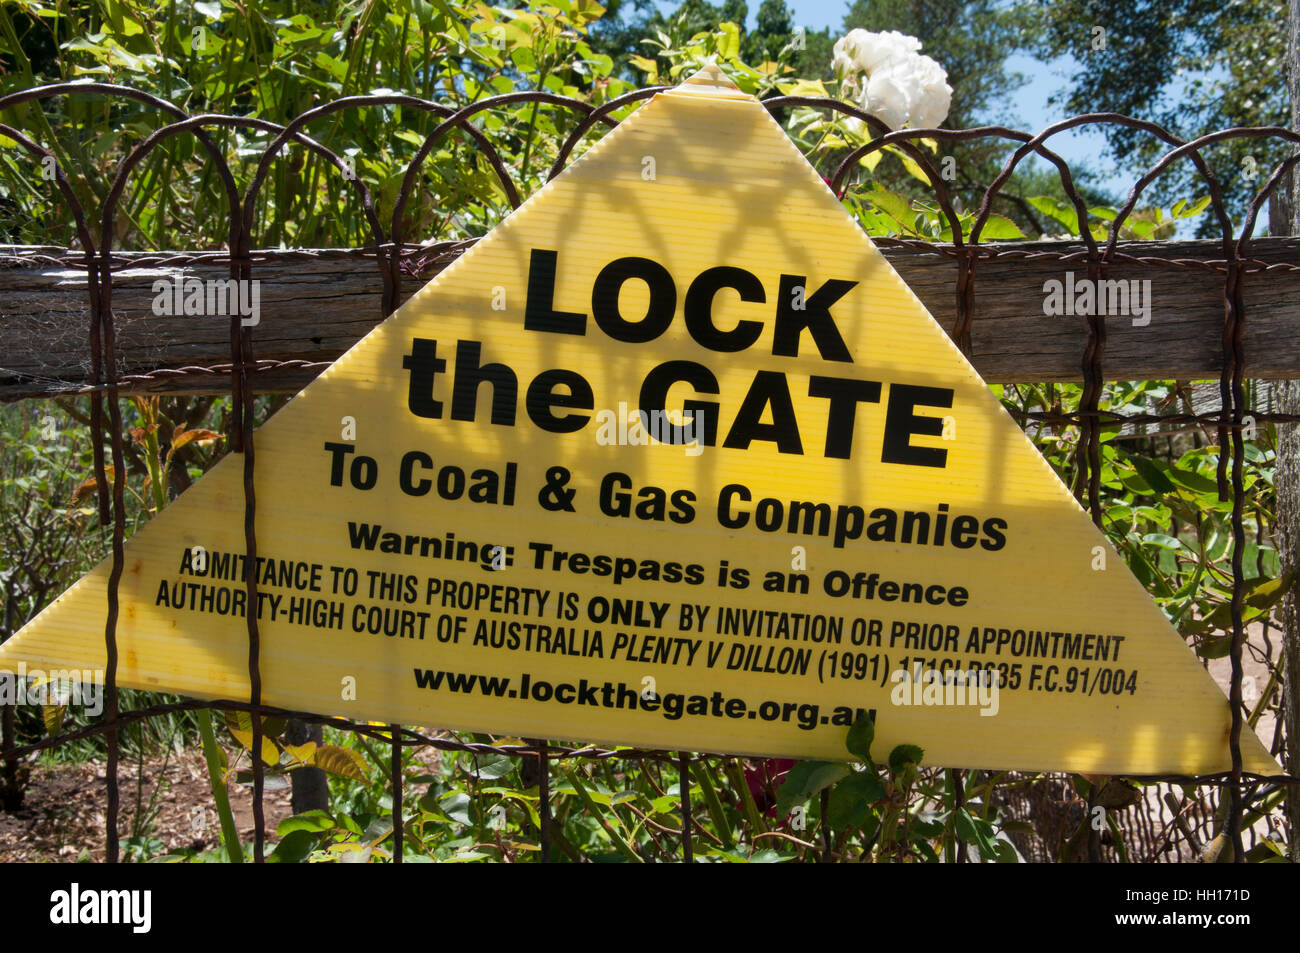 Farm gate sign protesting the intrusion of mining companies onto rural land across Australia. Stock Photo